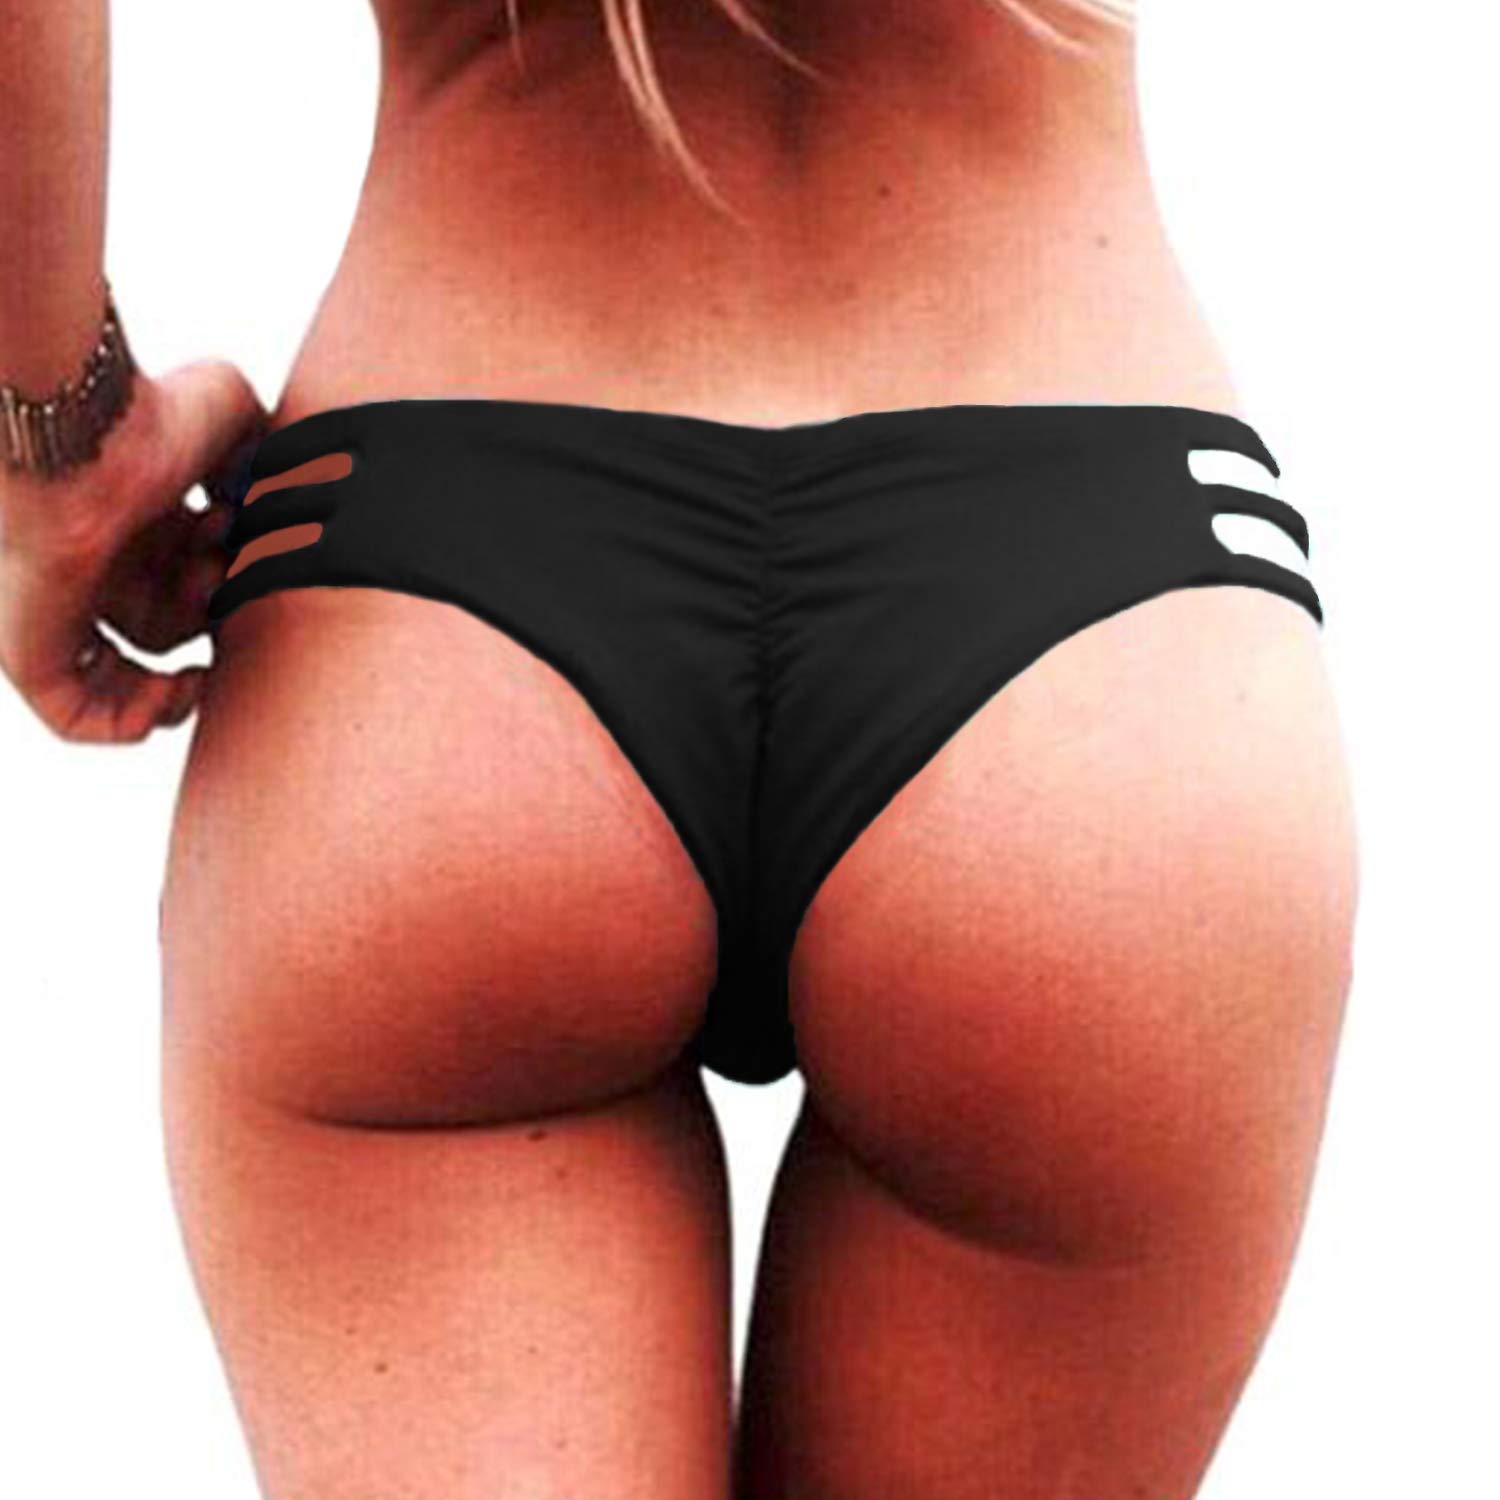 brad bauer recommends semi thong bikini bottoms pic